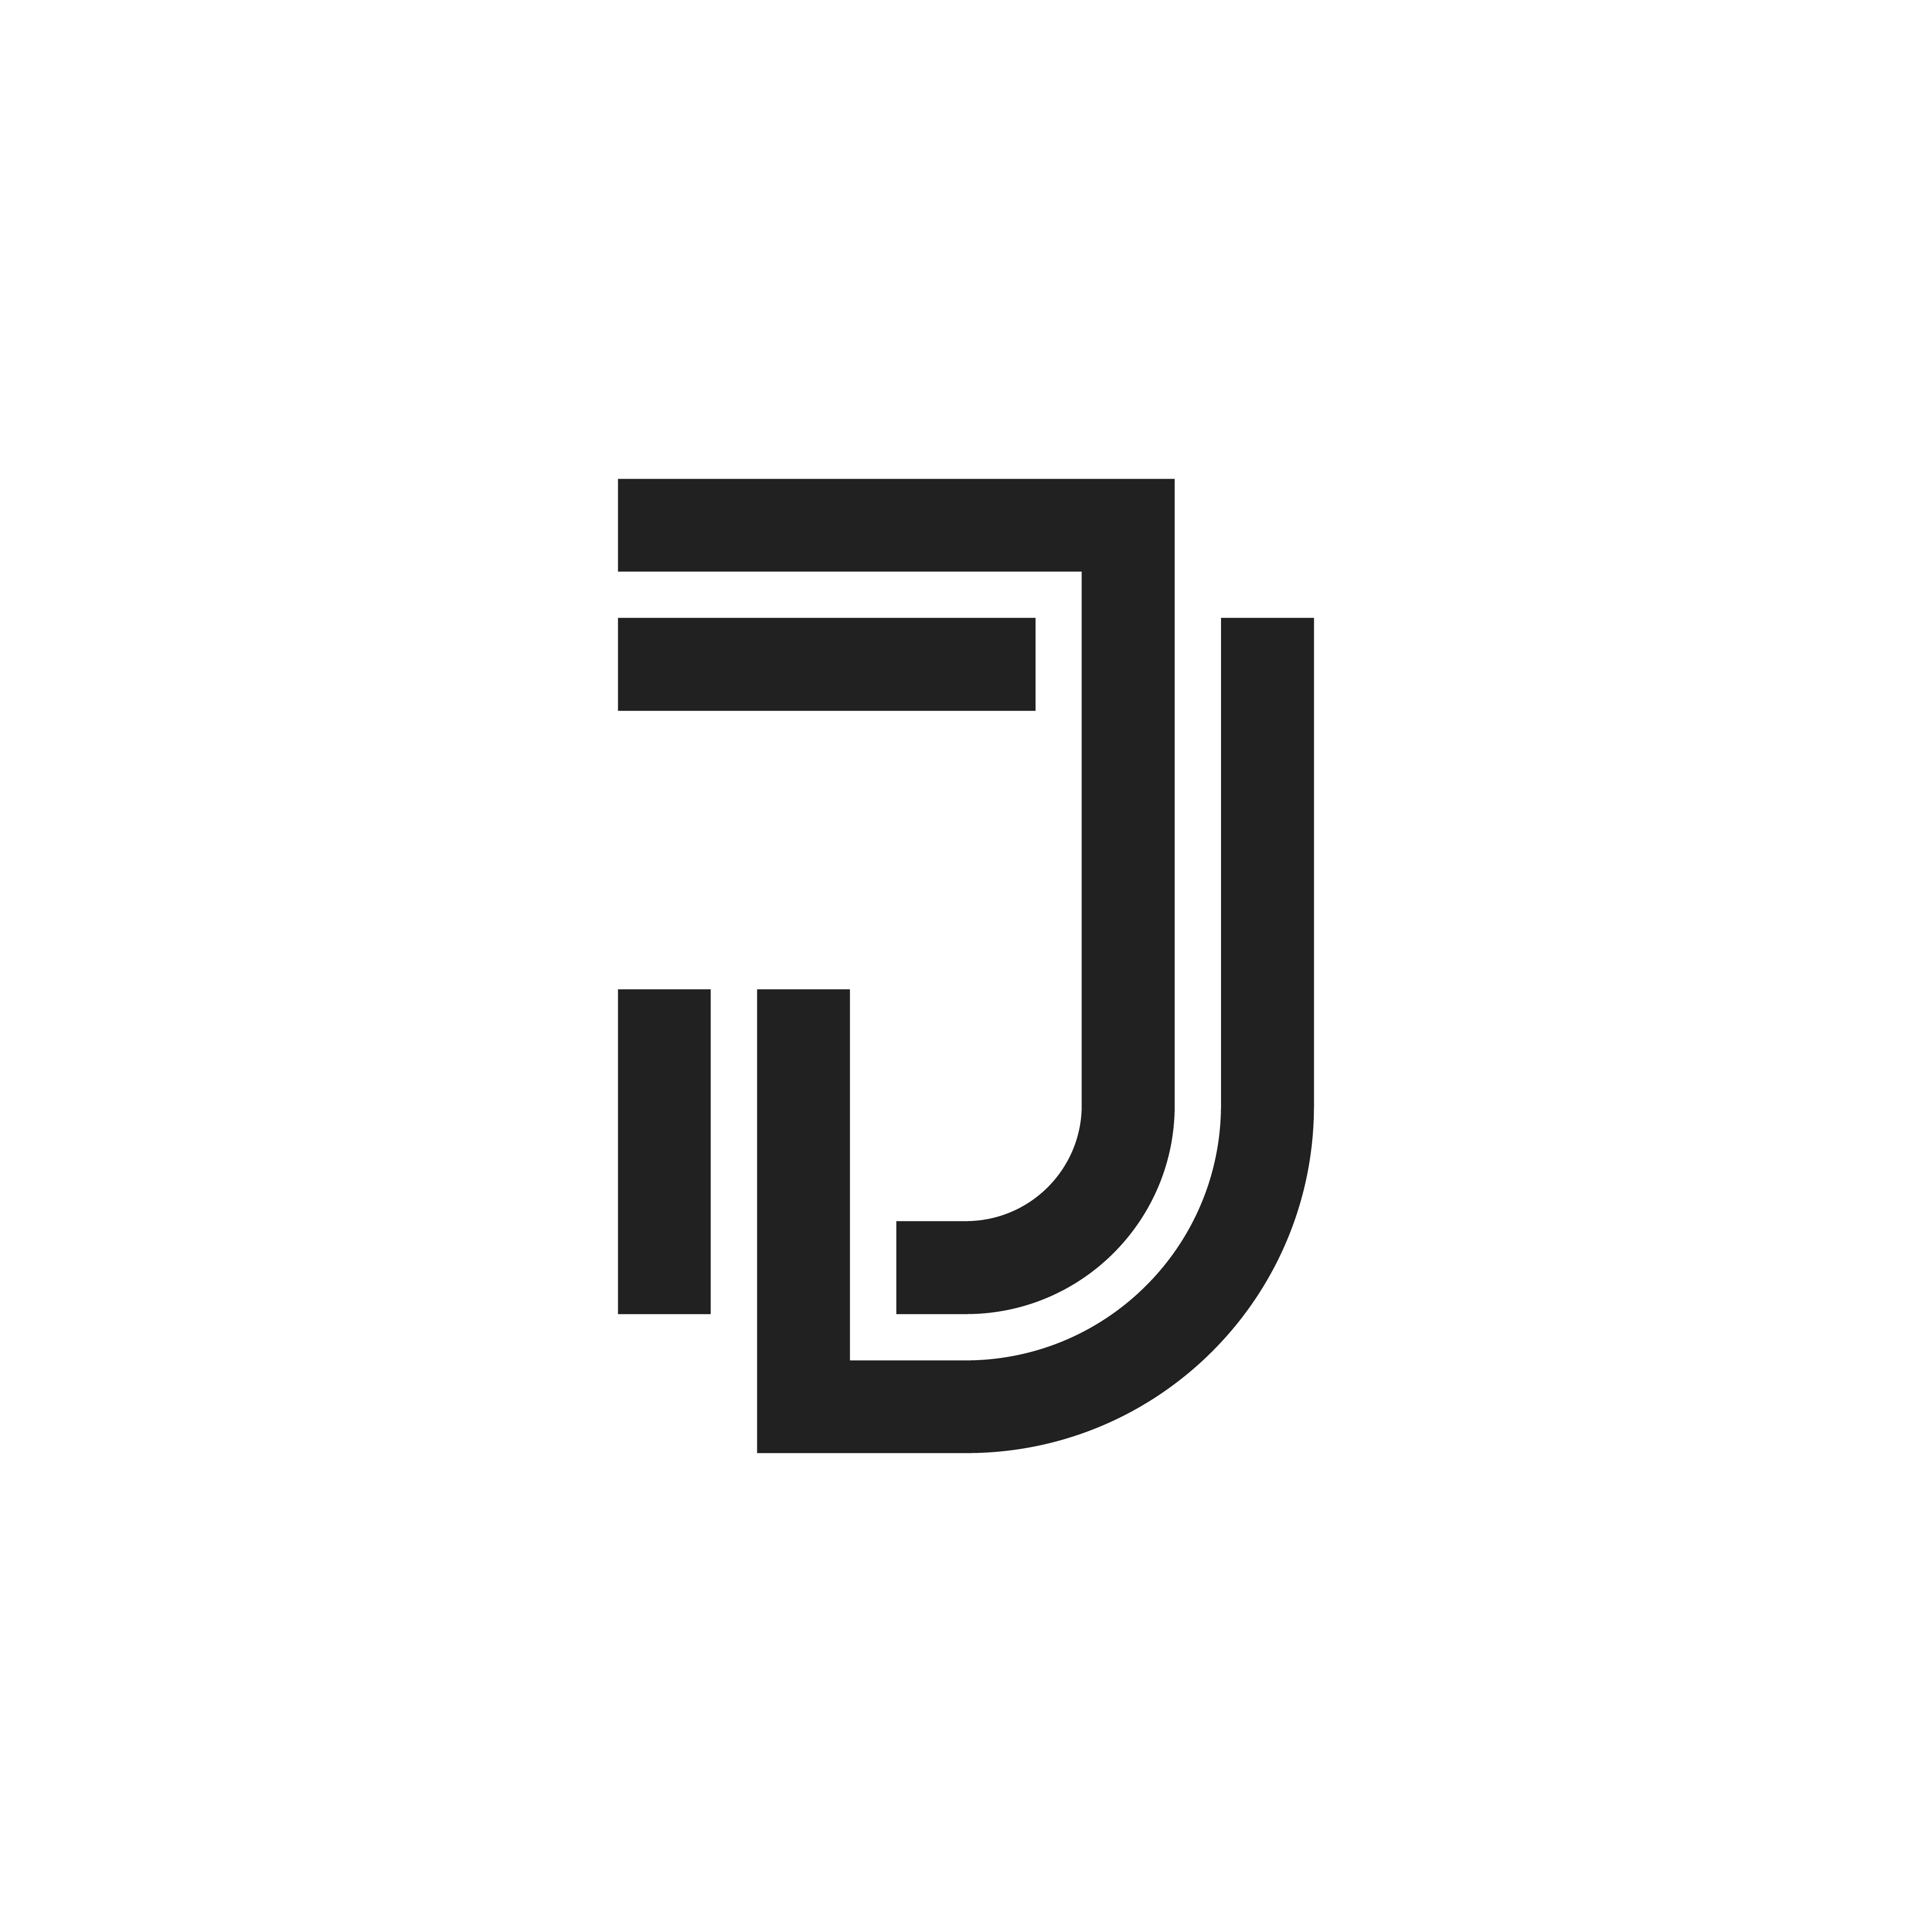 Letter J logo design by logo designer Francesco Bonetti for your inspiration and for the worlds largest logo competition